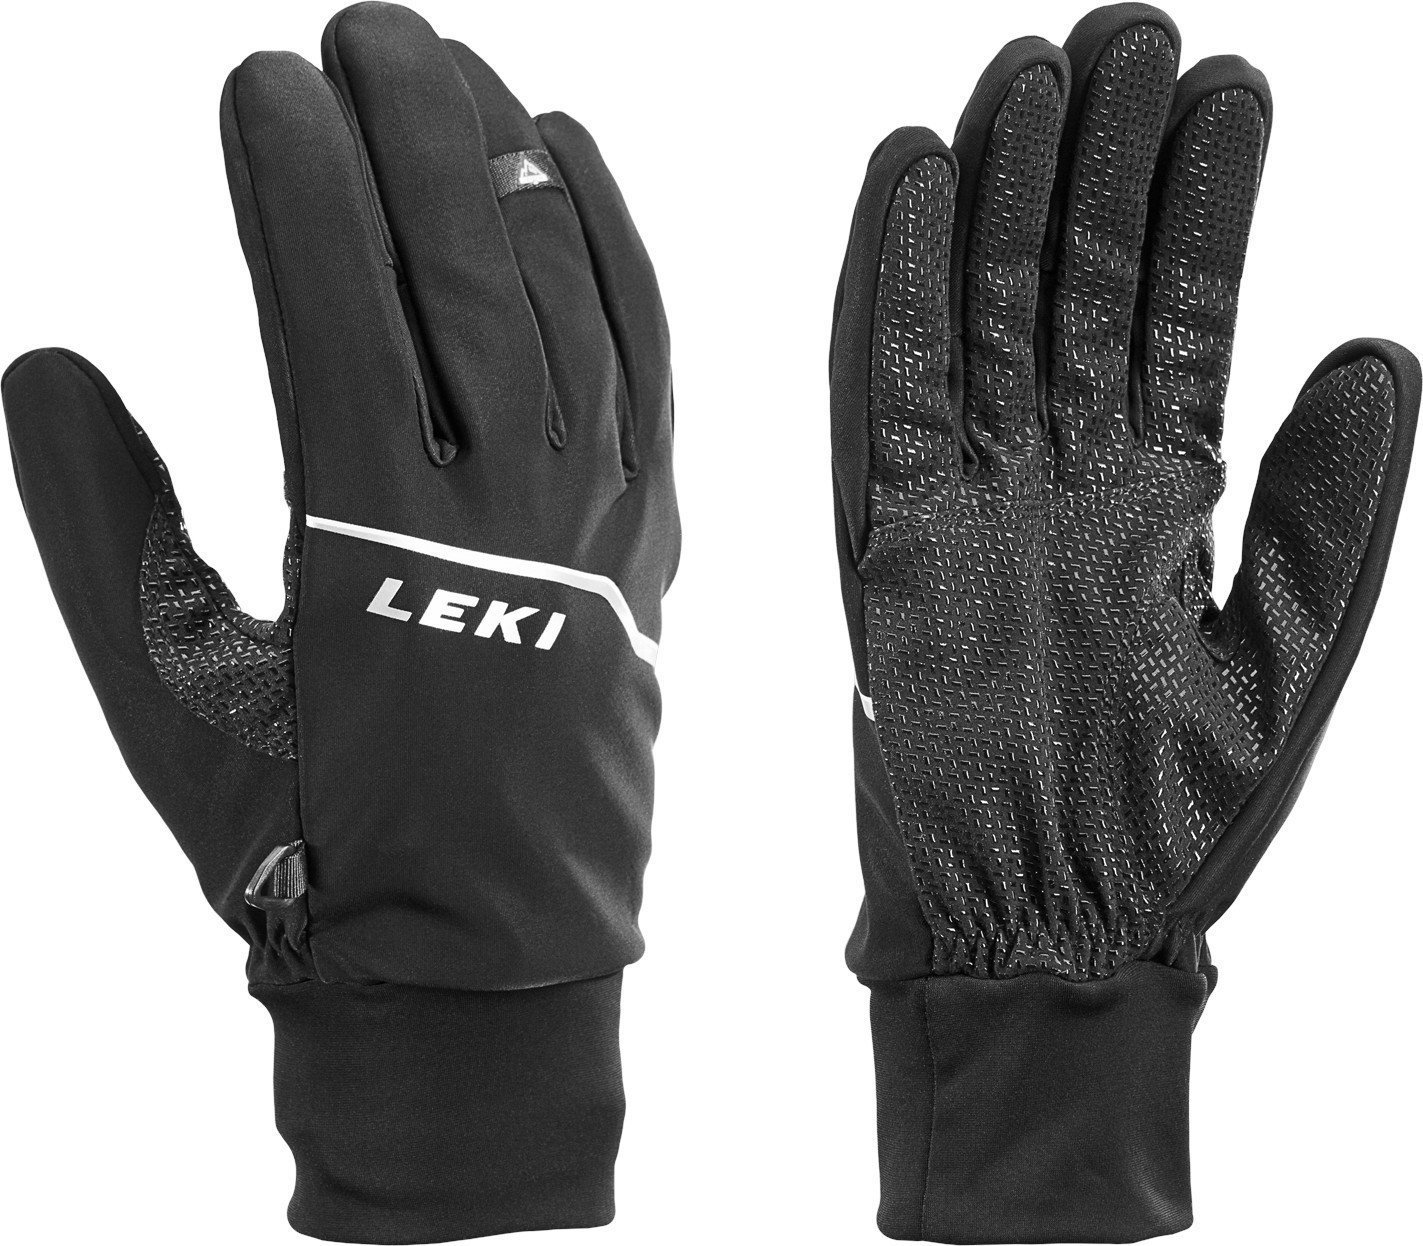 Gloves Leki Tour Lite Black/Chrome/White 9 Gloves